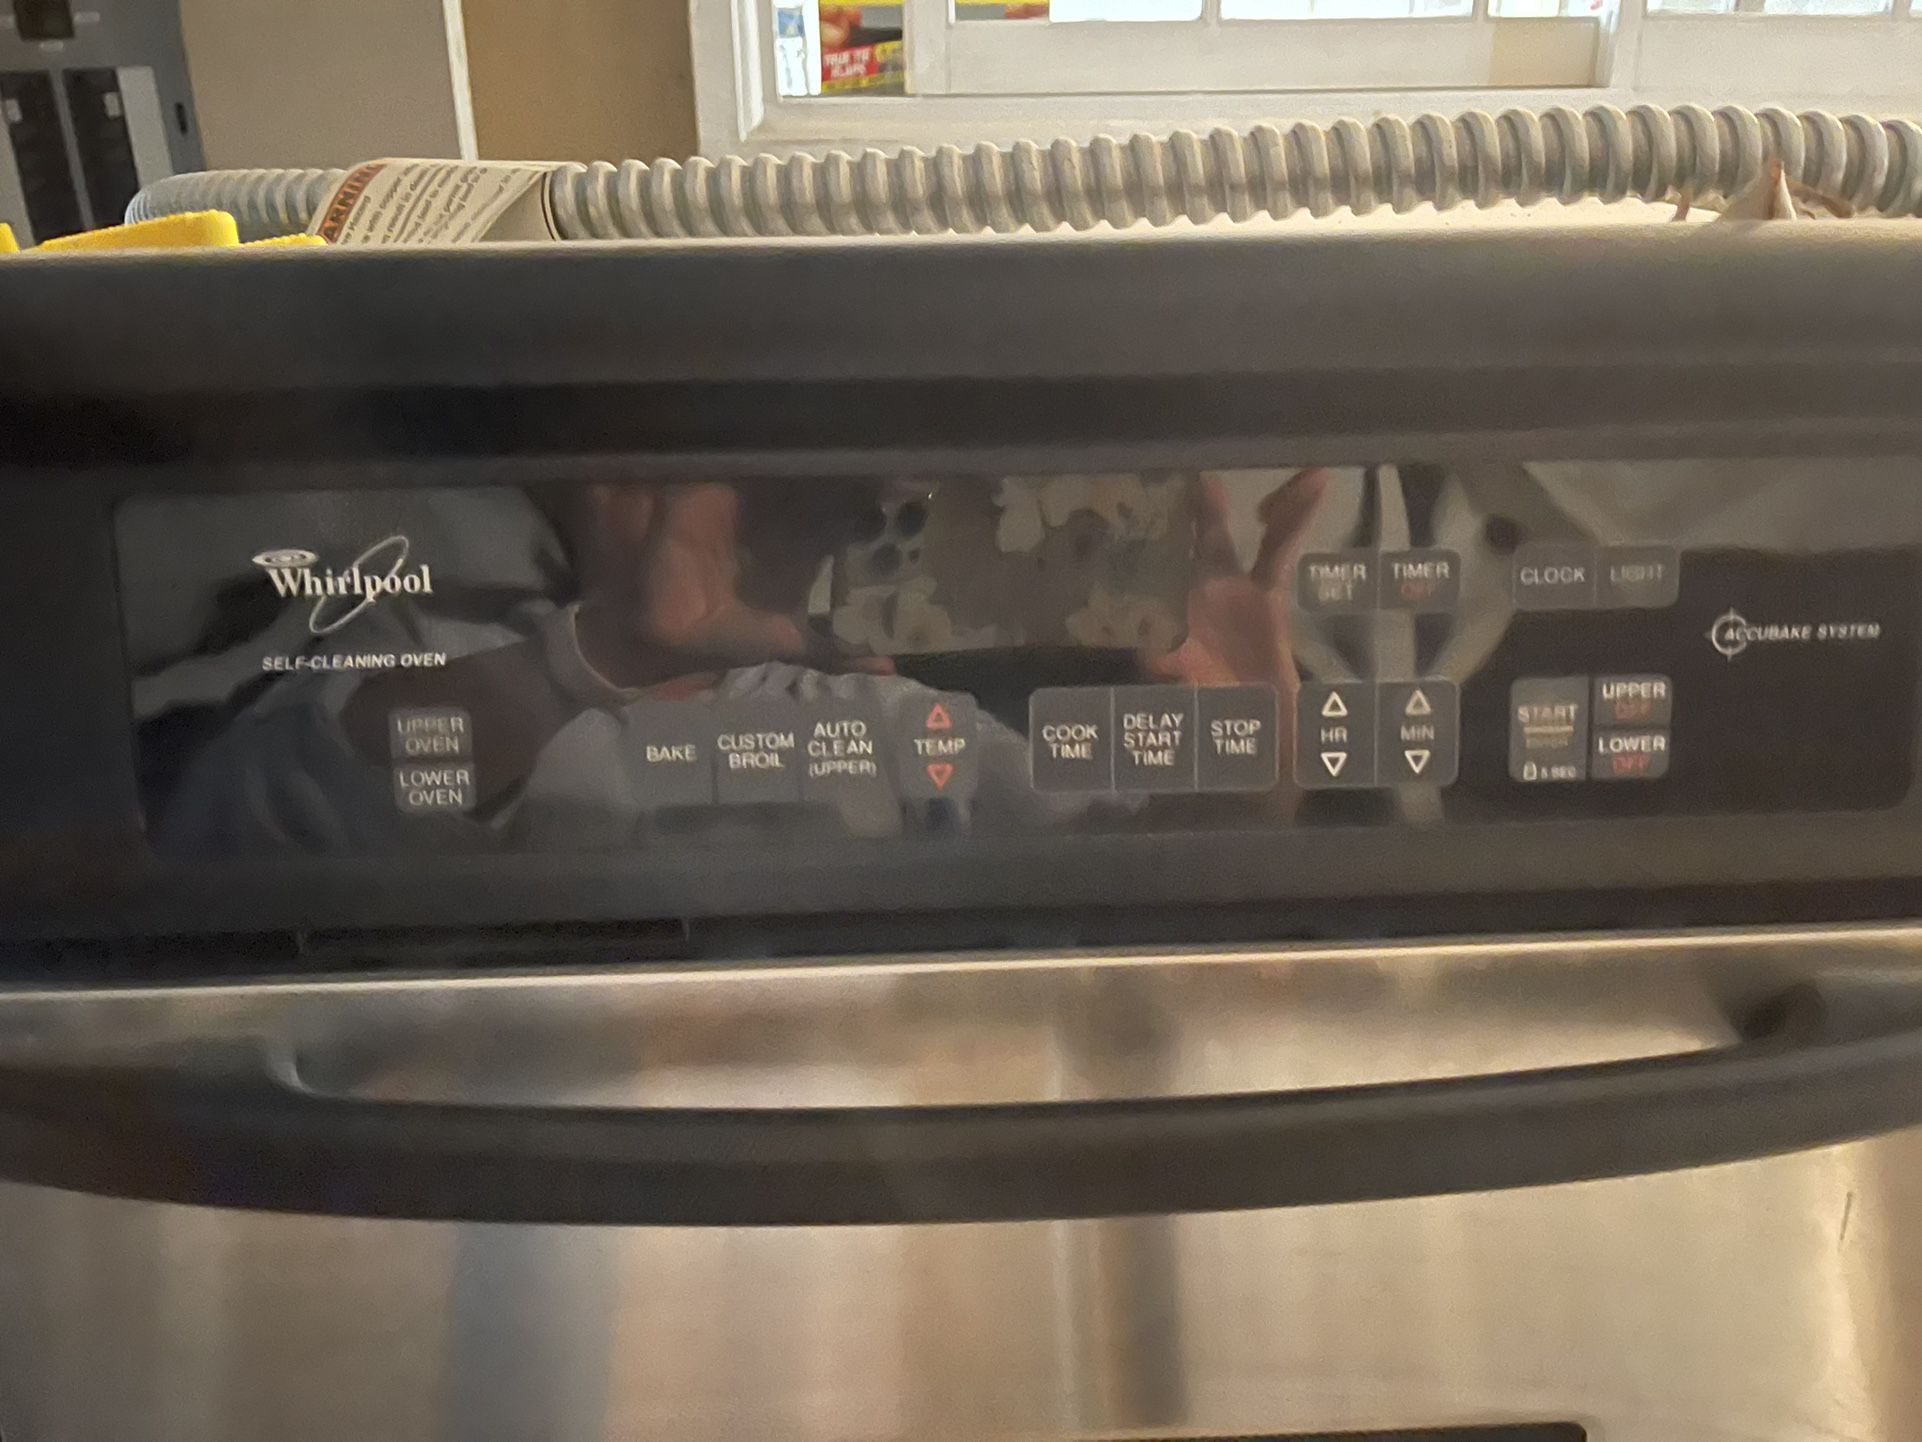 Ninja Smart Double Oven for Sale in San Jose, CA - OfferUp